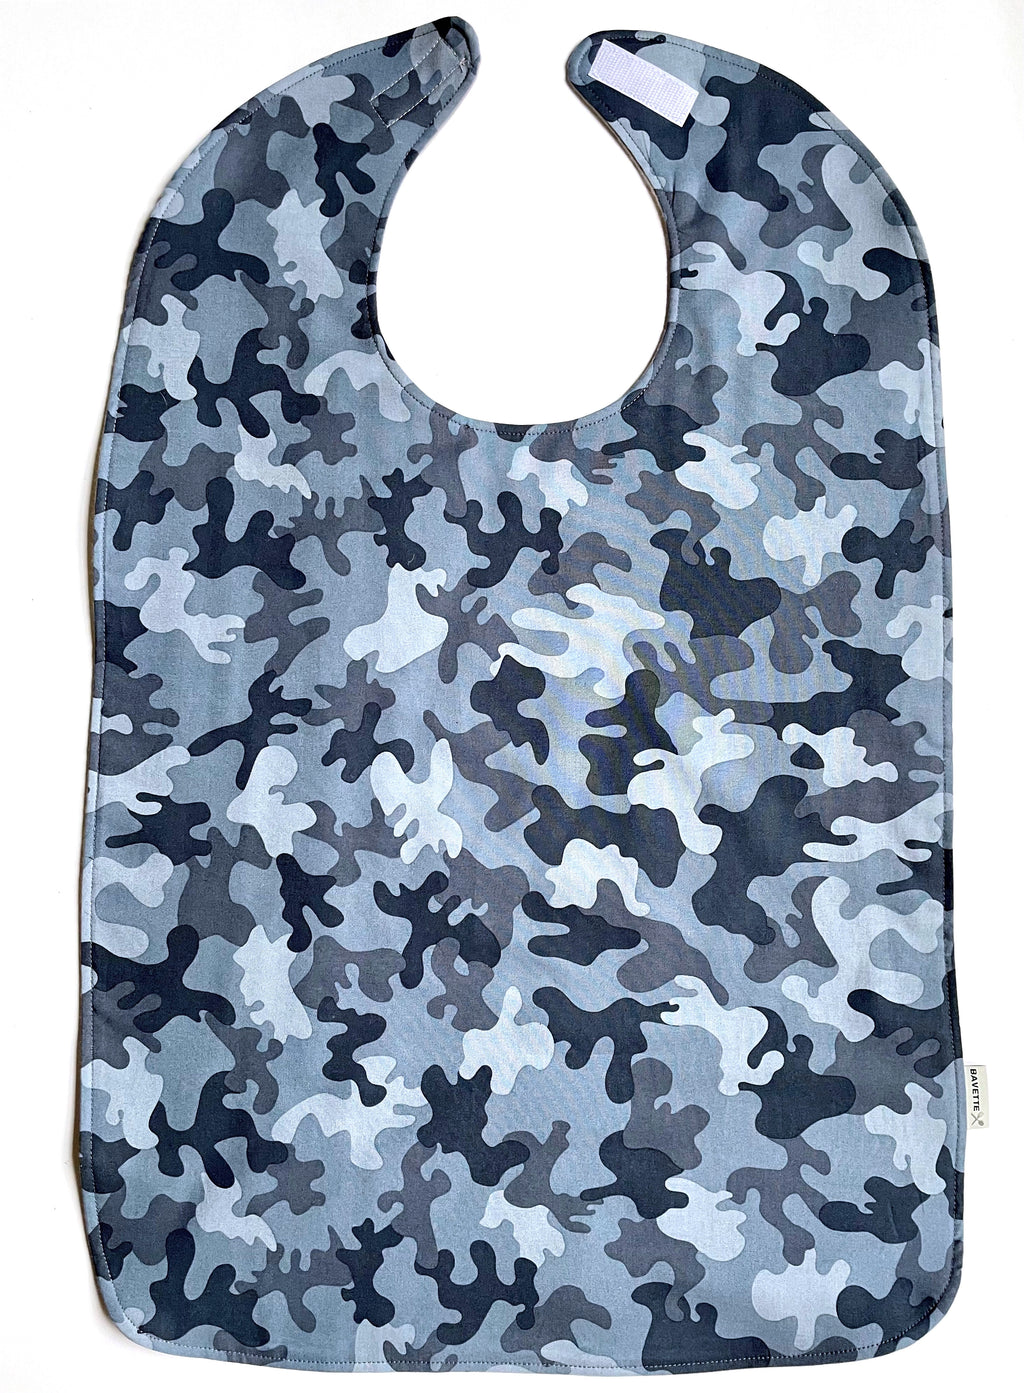 BAVETTE 100% cotton adult bib, dark and light blue camouflage design. 